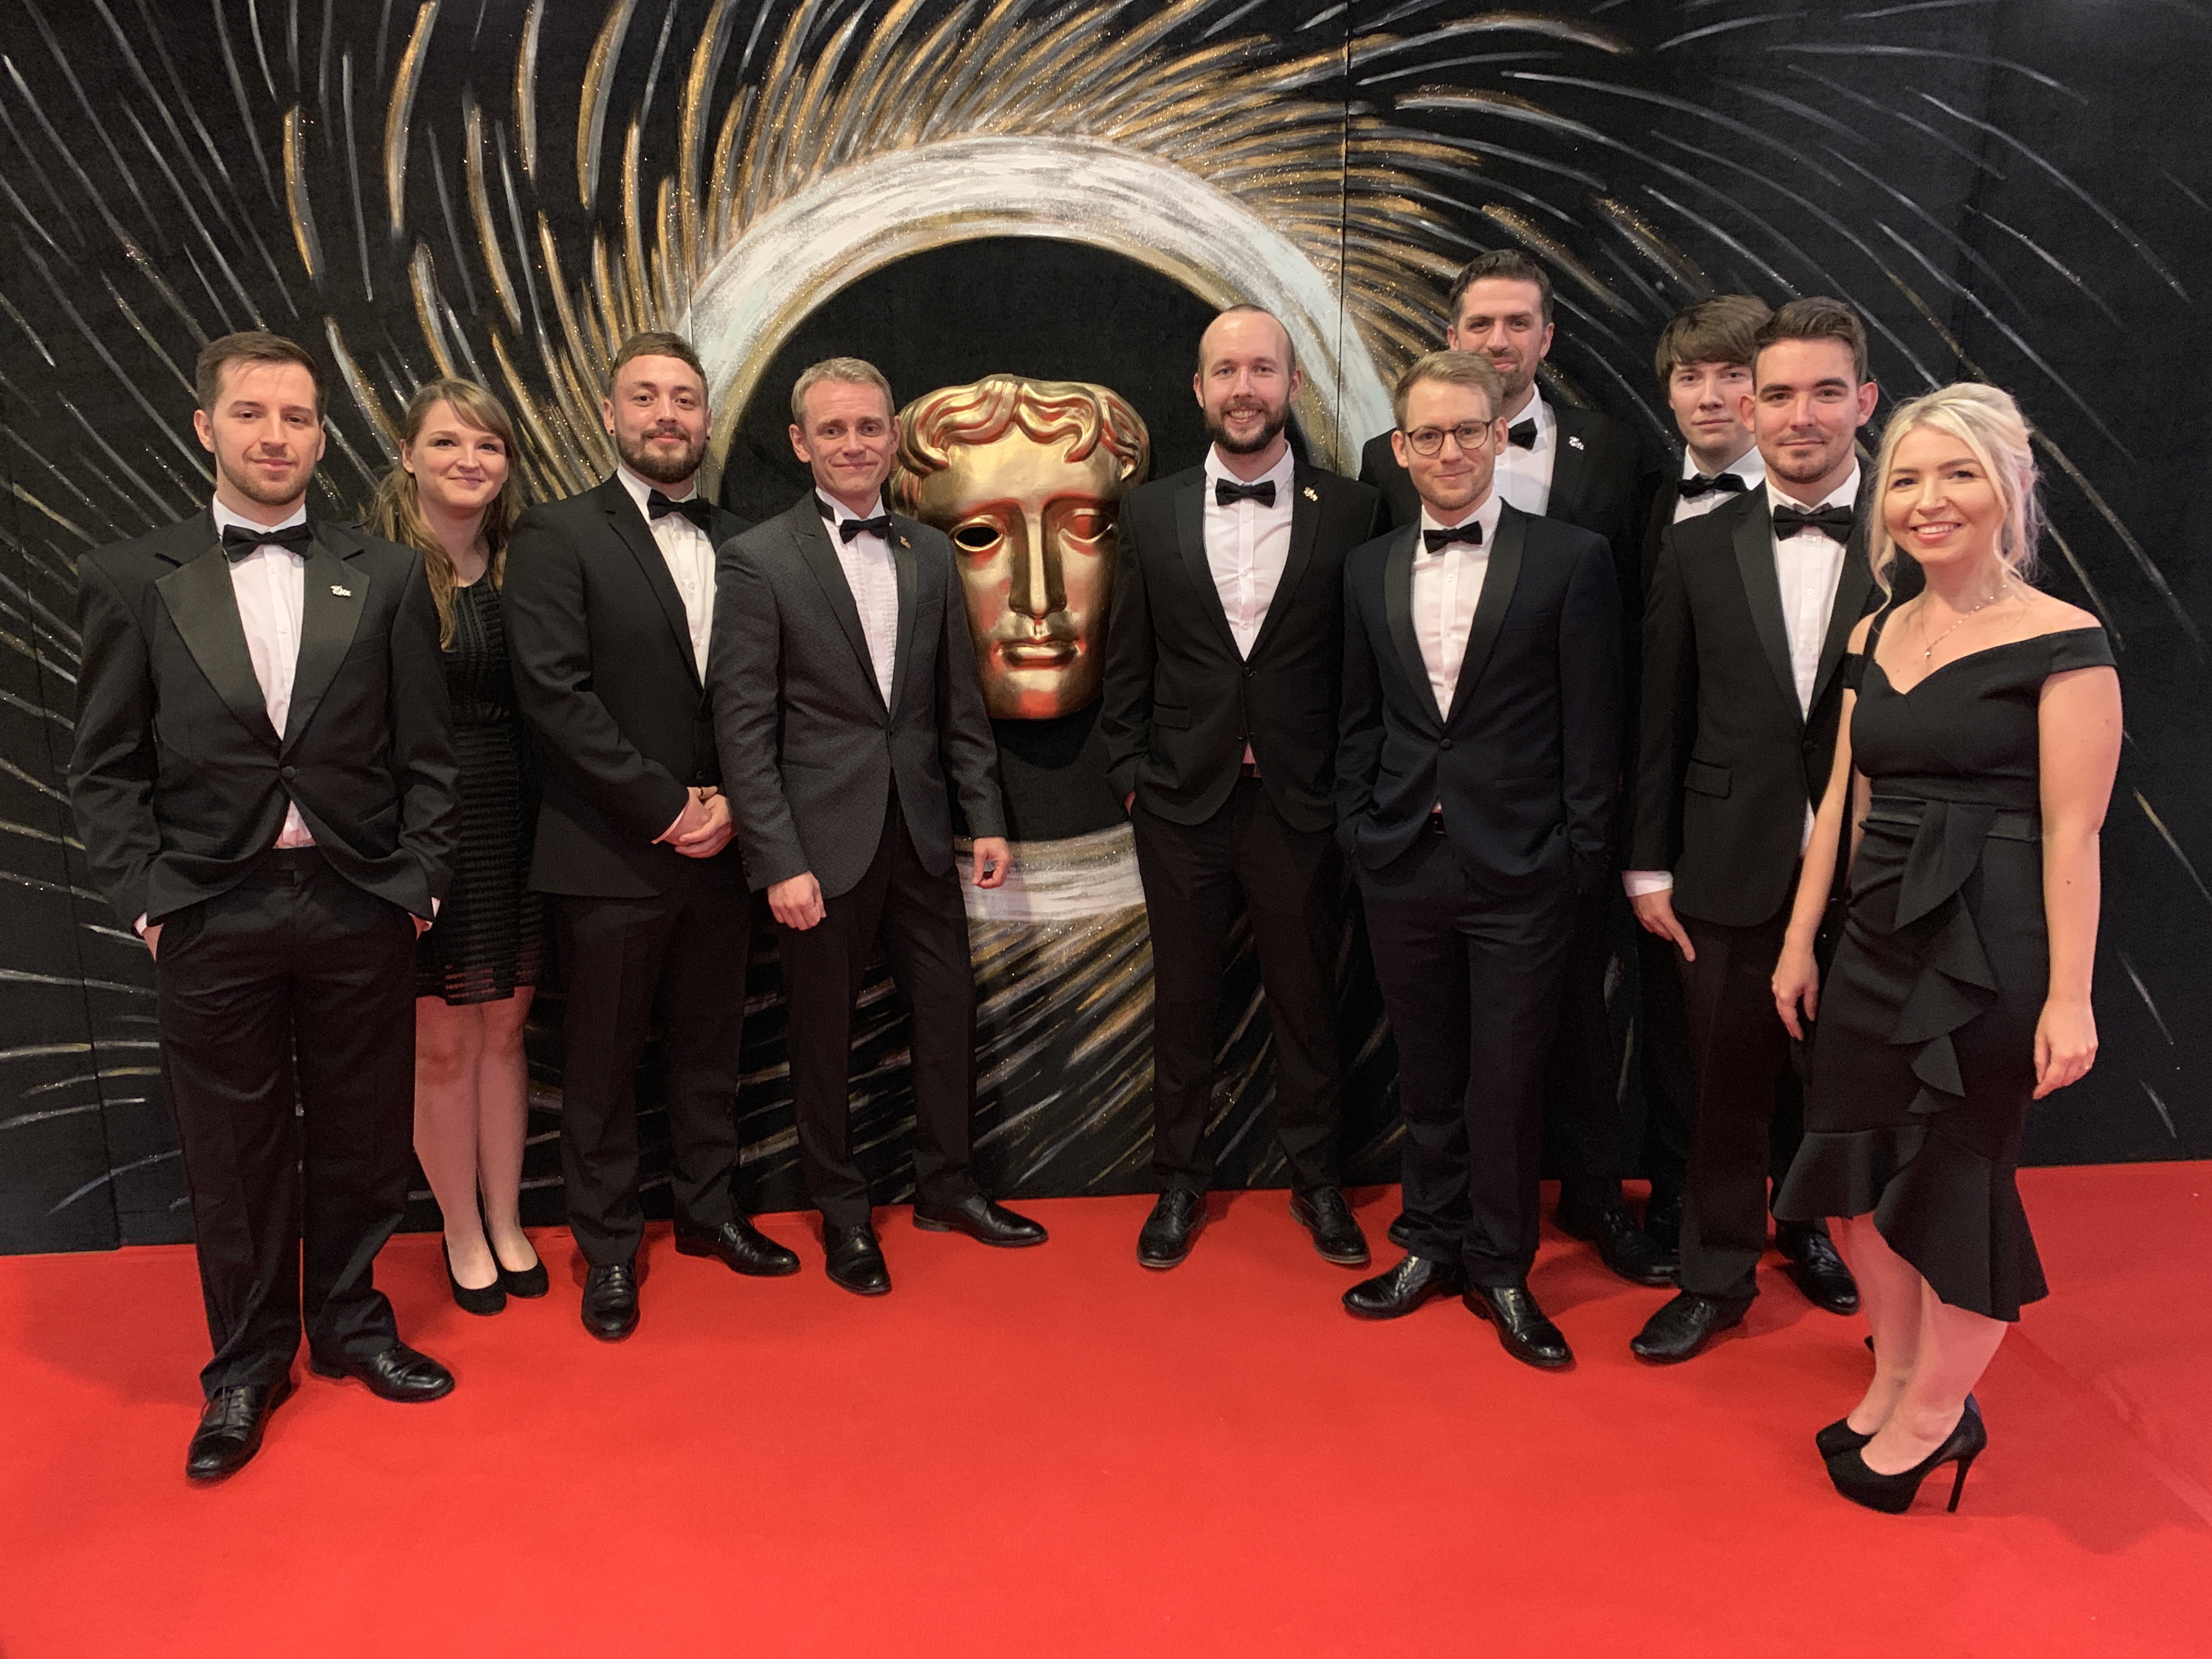 Wales Interactive team shot at awards ceremony